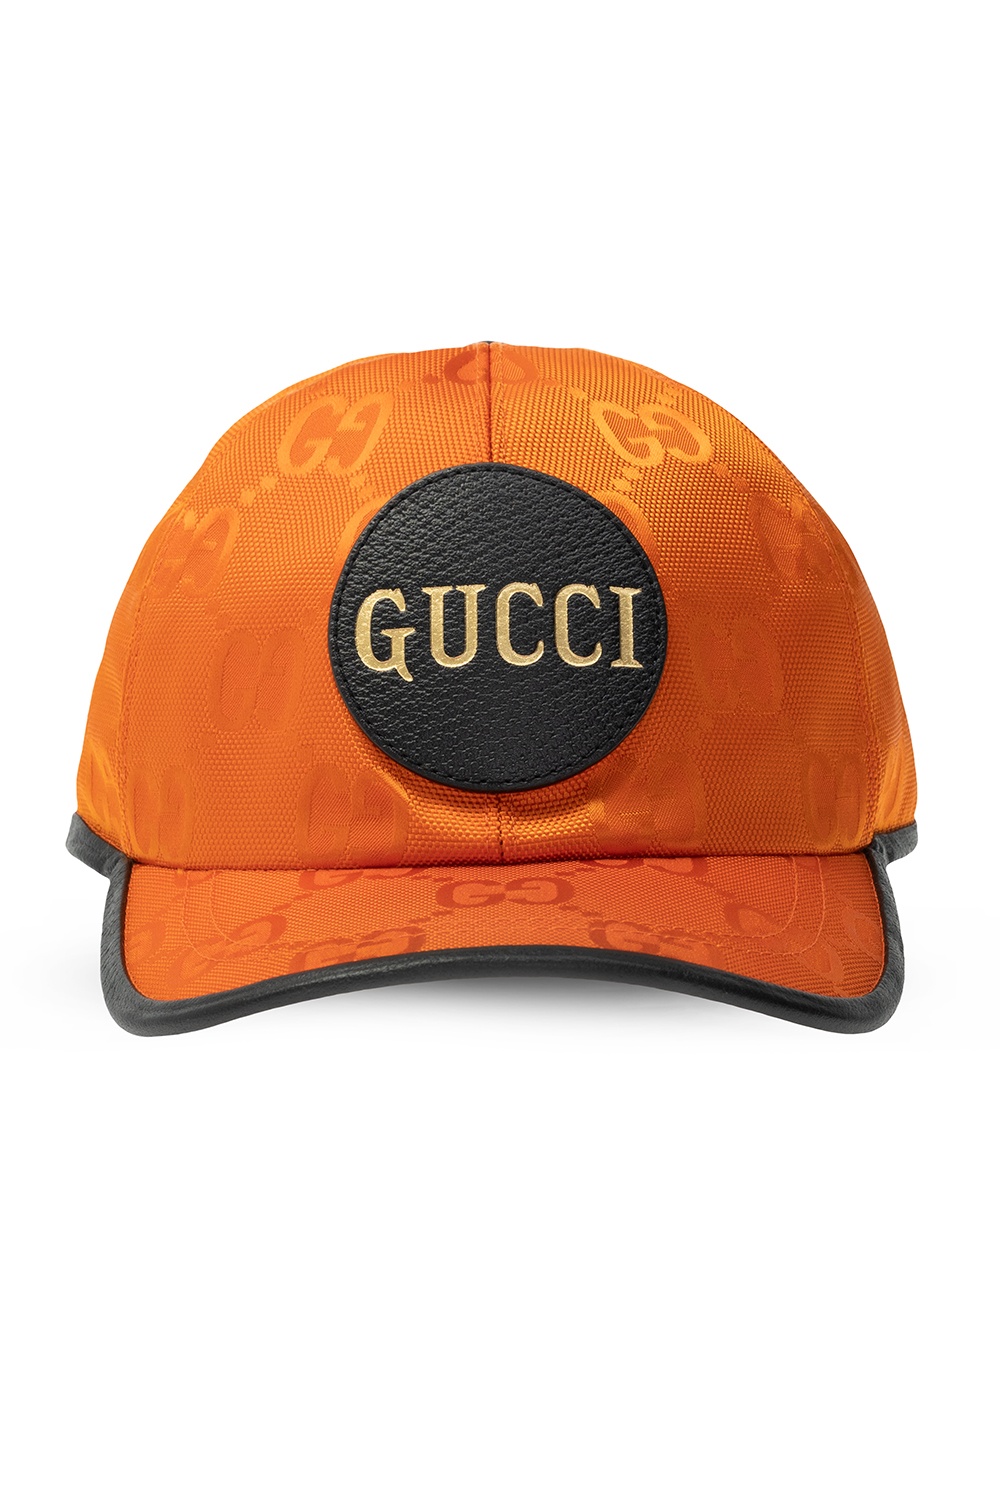 Gucci Logo baseball cap